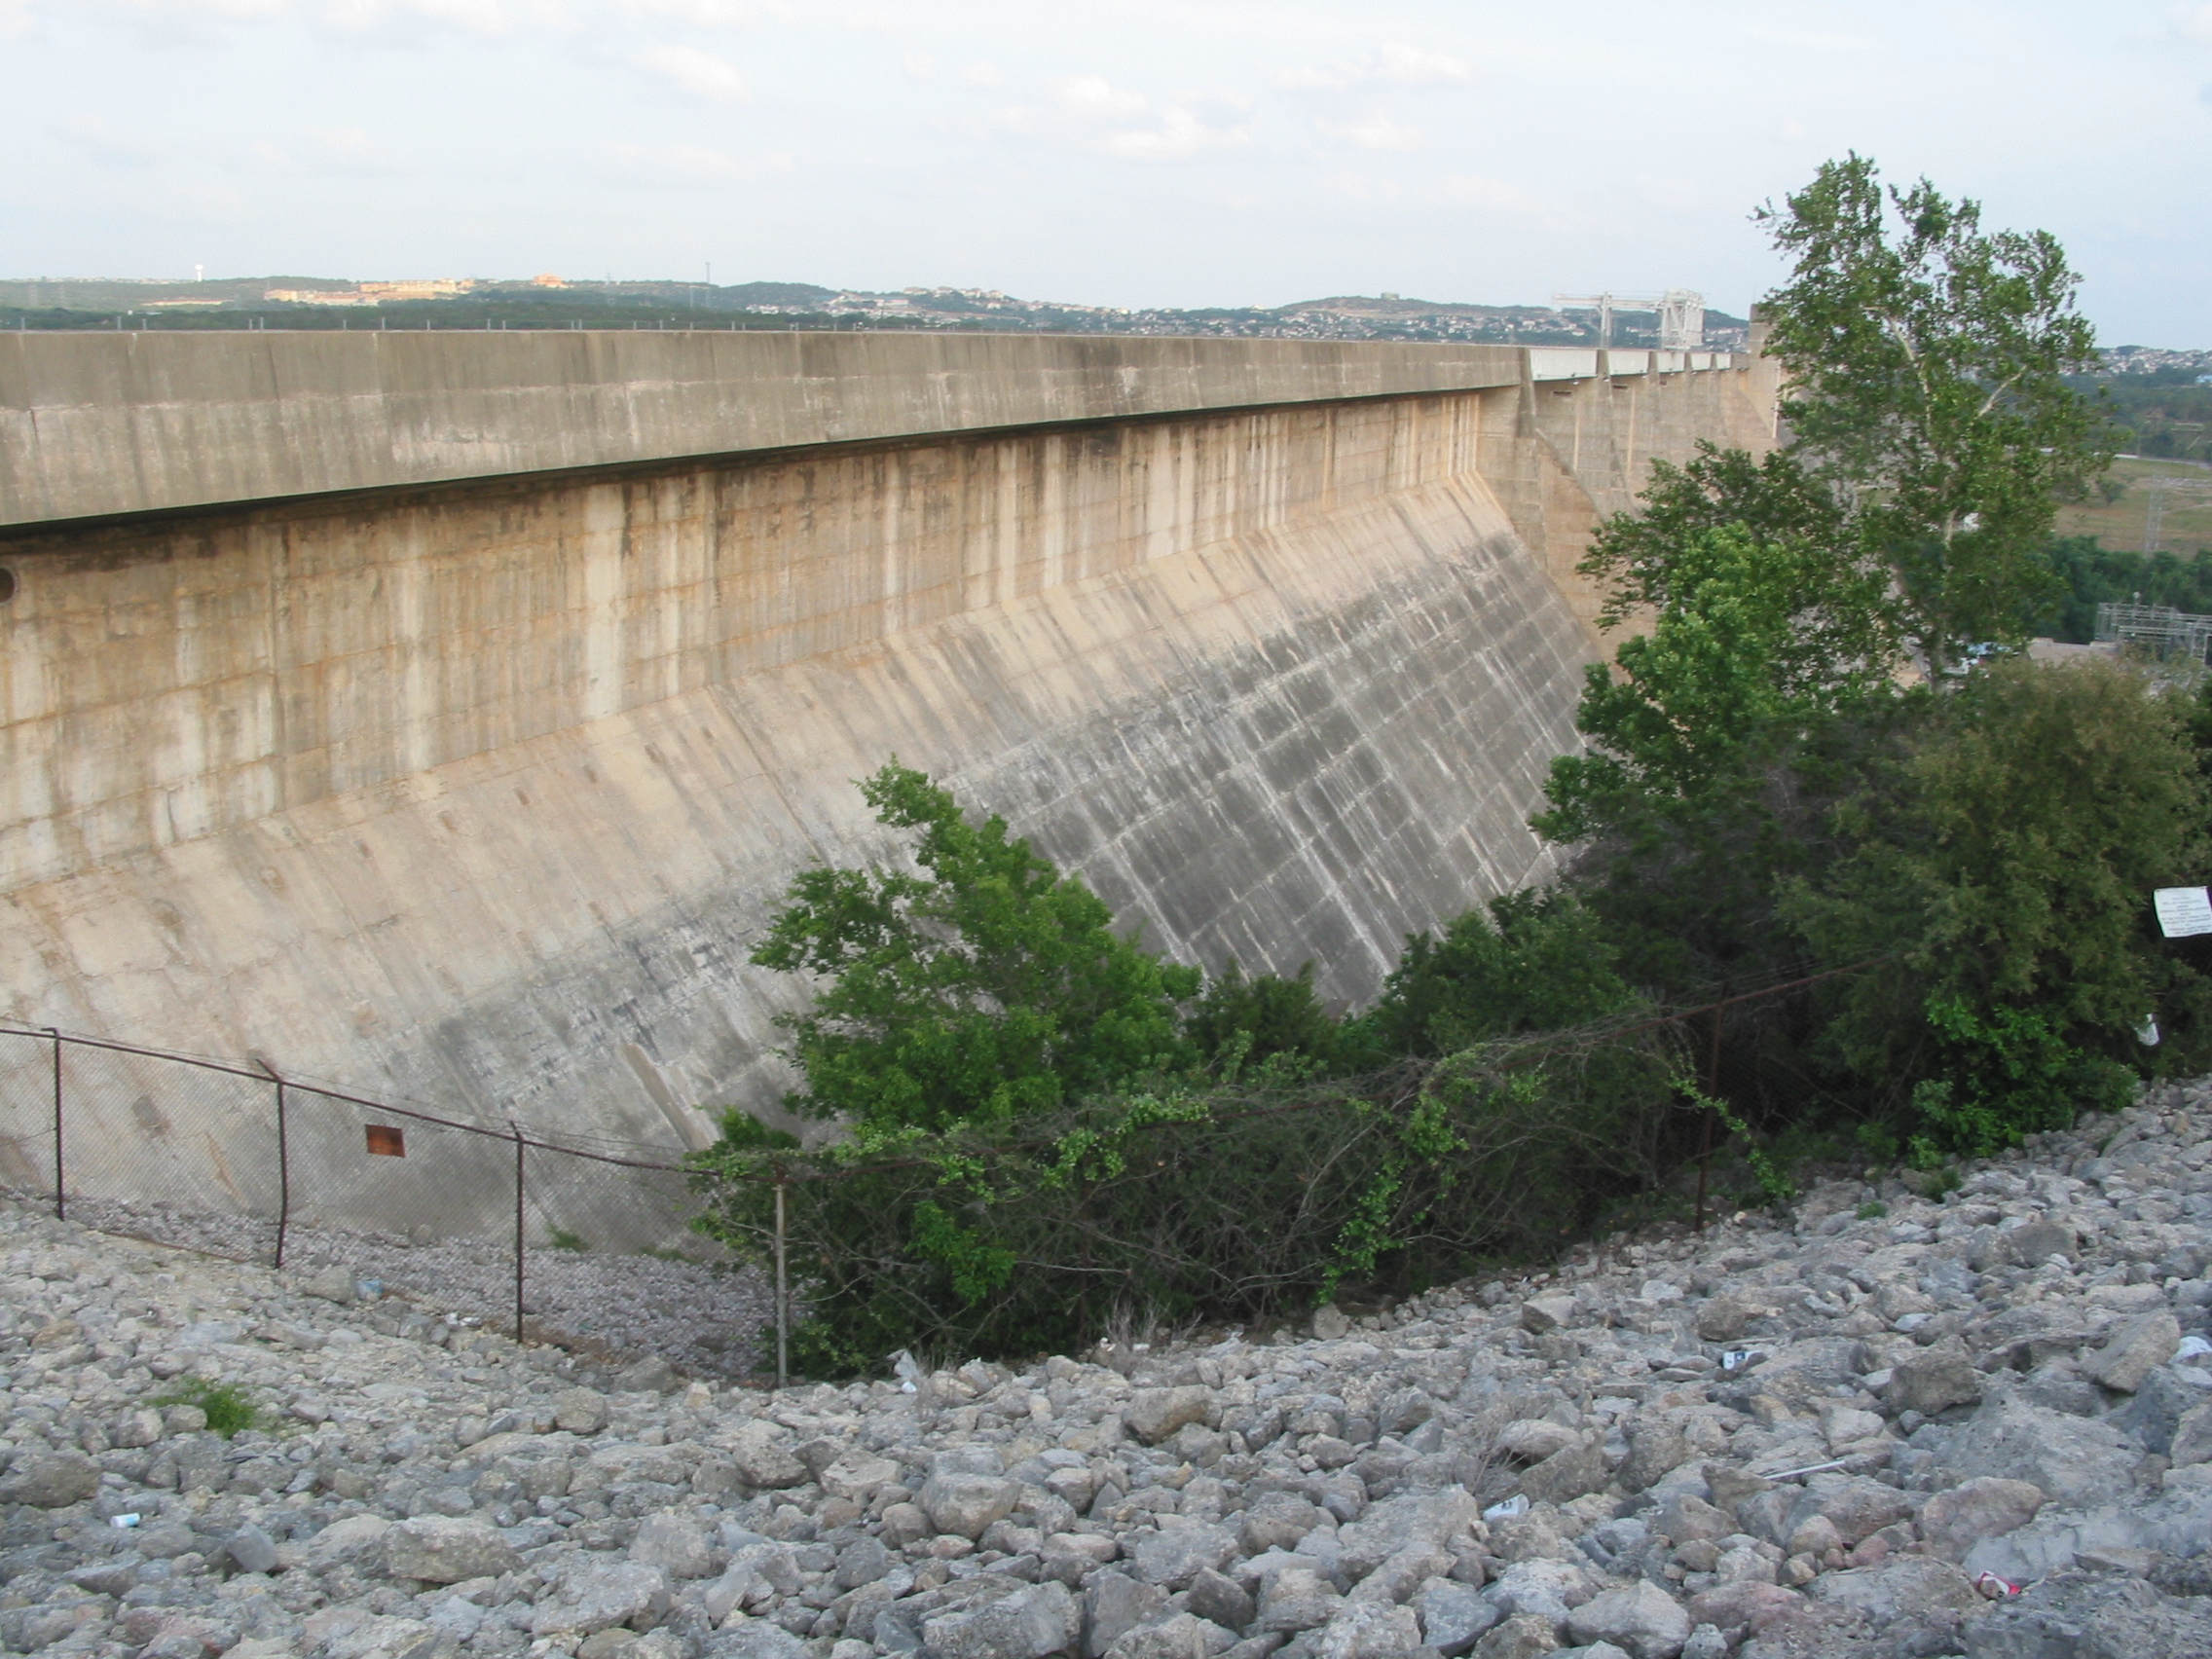 Mansfield dam